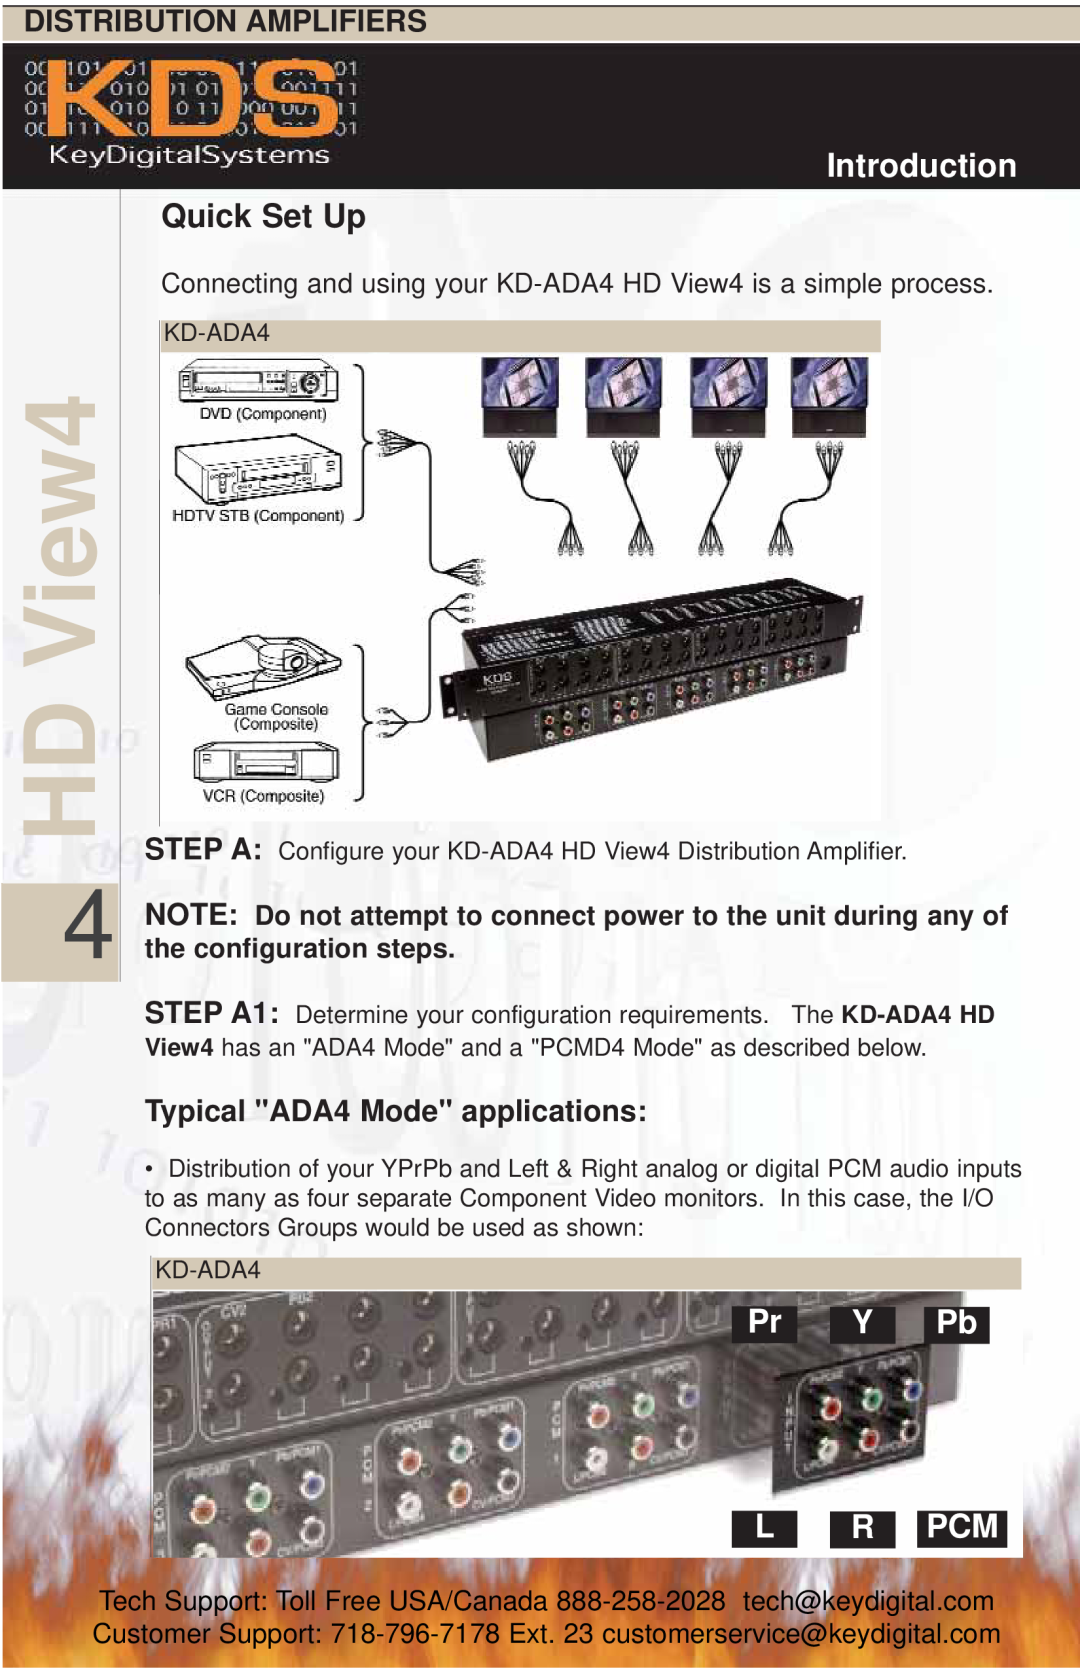 Key Digital KD-ADA4 Quick Set Up, Pr Y Pb L R PCM, Typical ADA4 Mode applications, Introduction, Distribution Amplifiers 